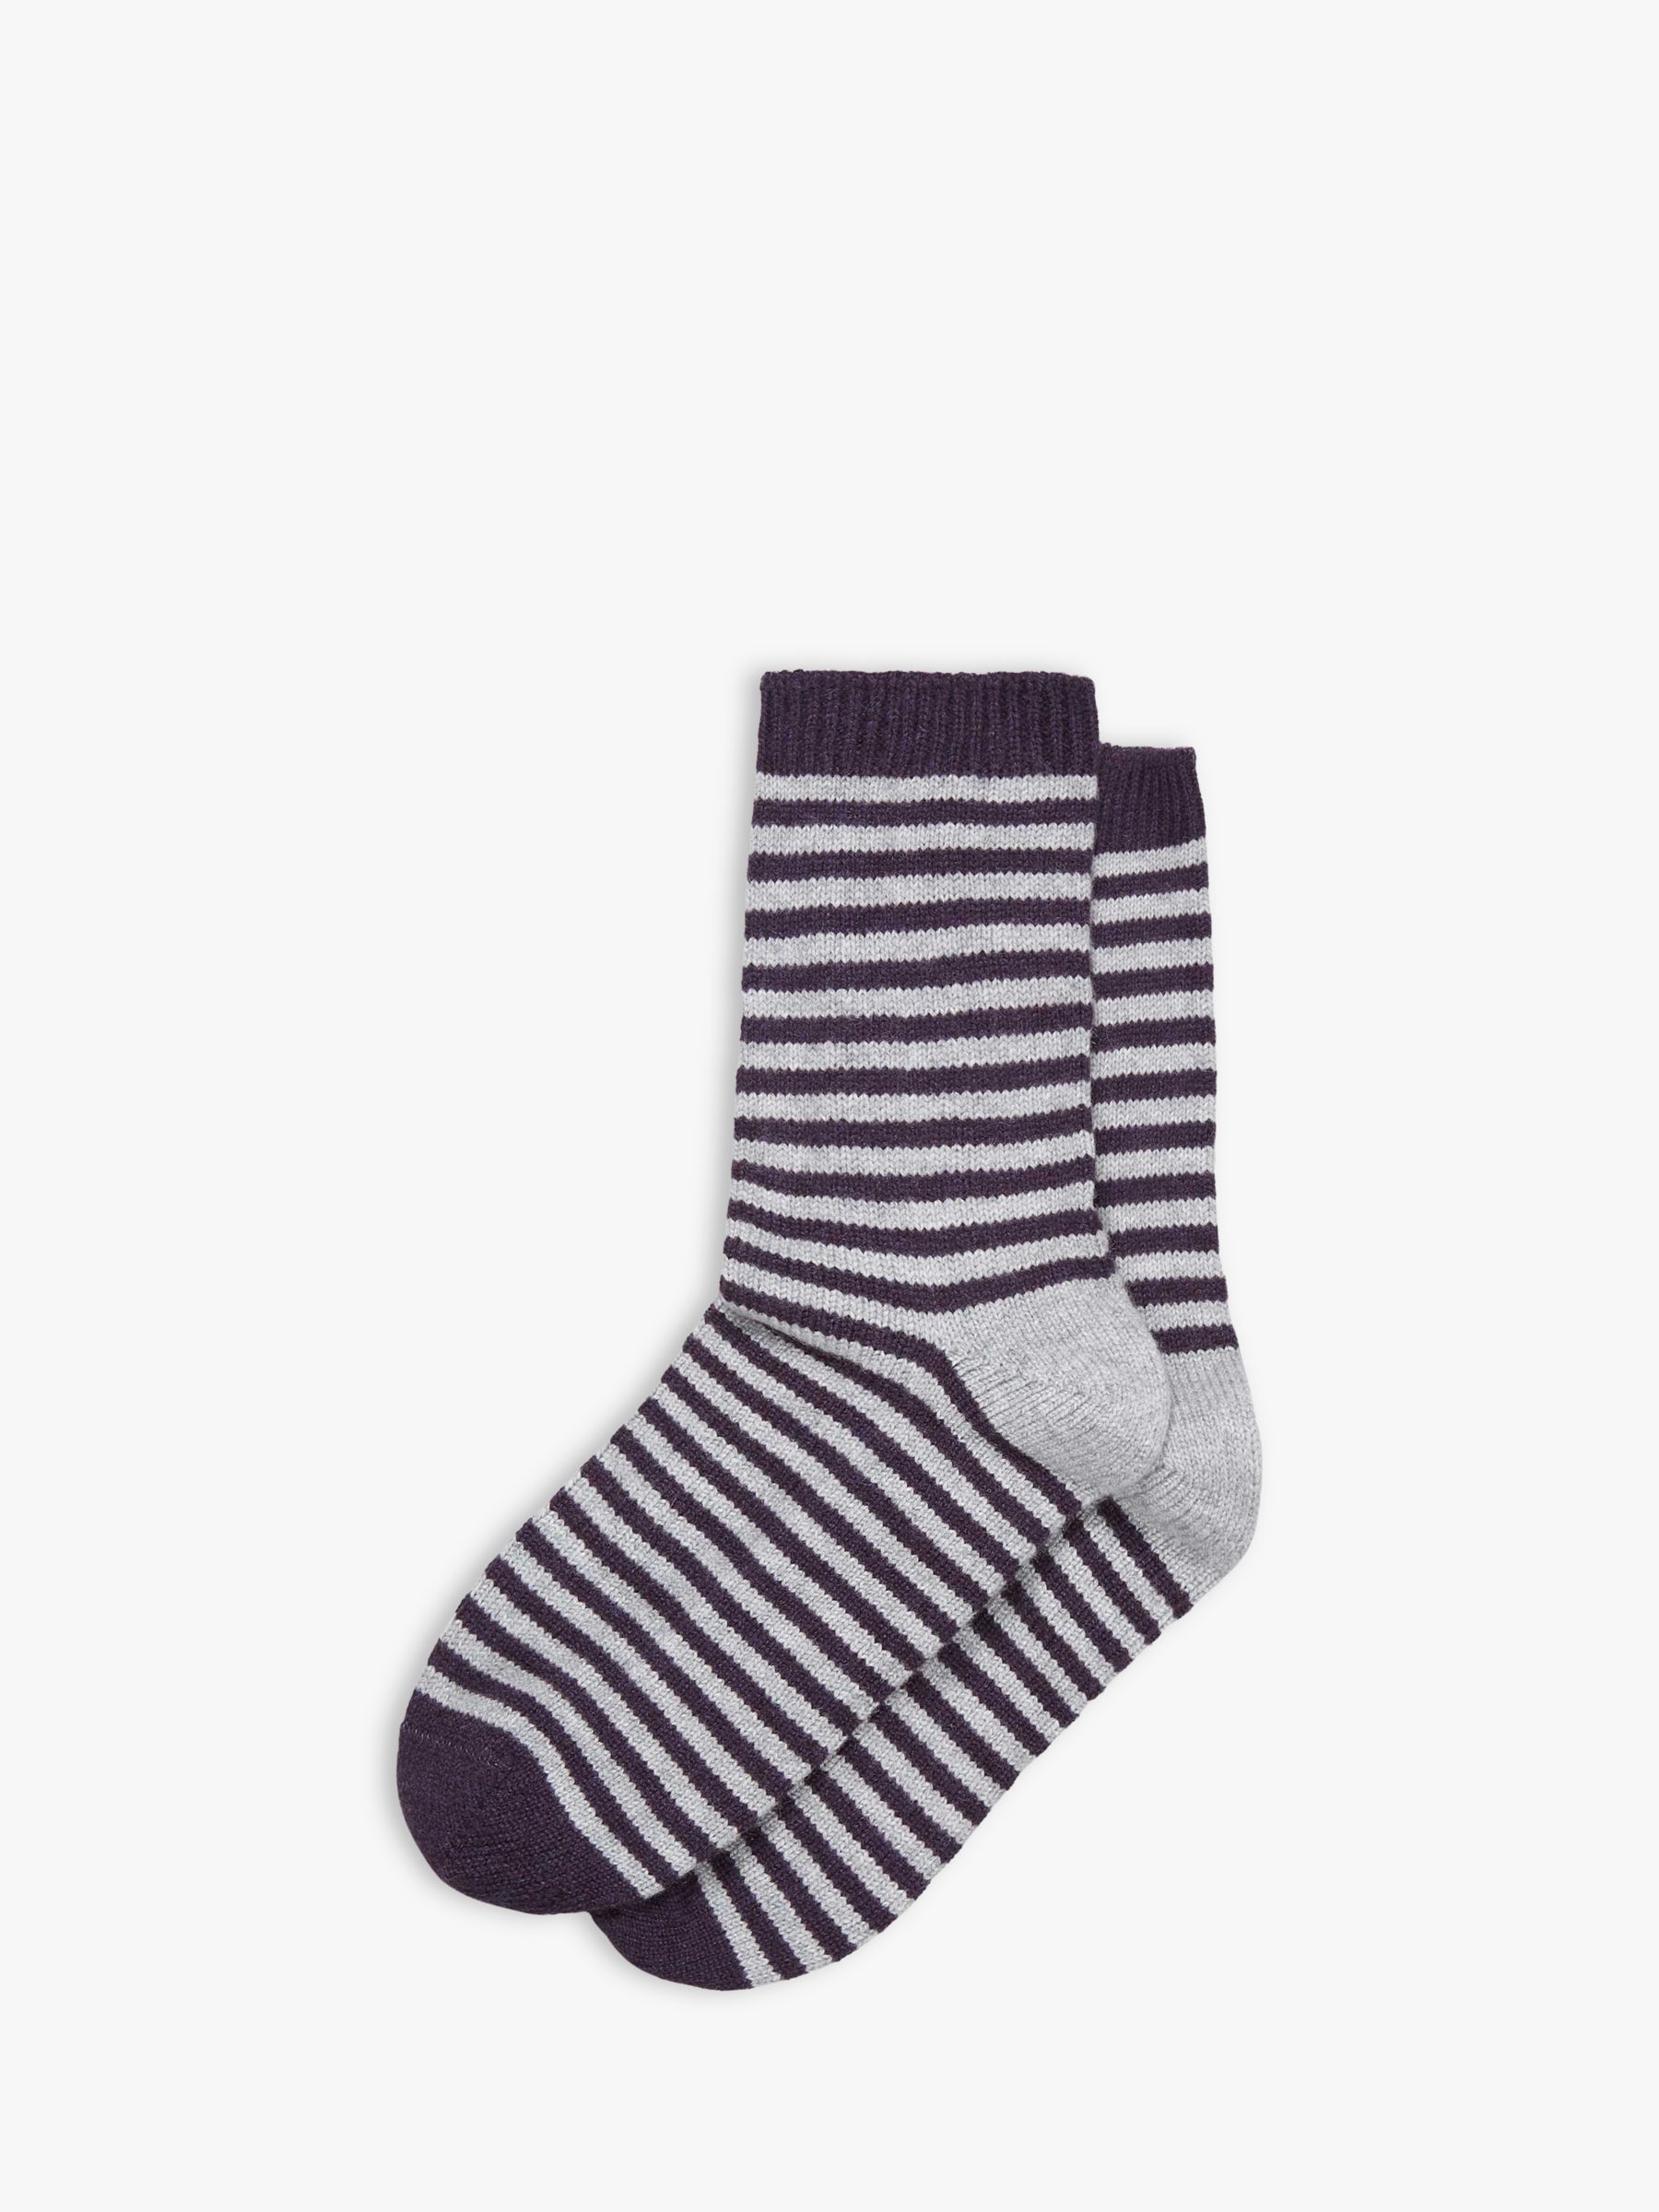 Brora Cashmere Blend Striped Socks, Plum